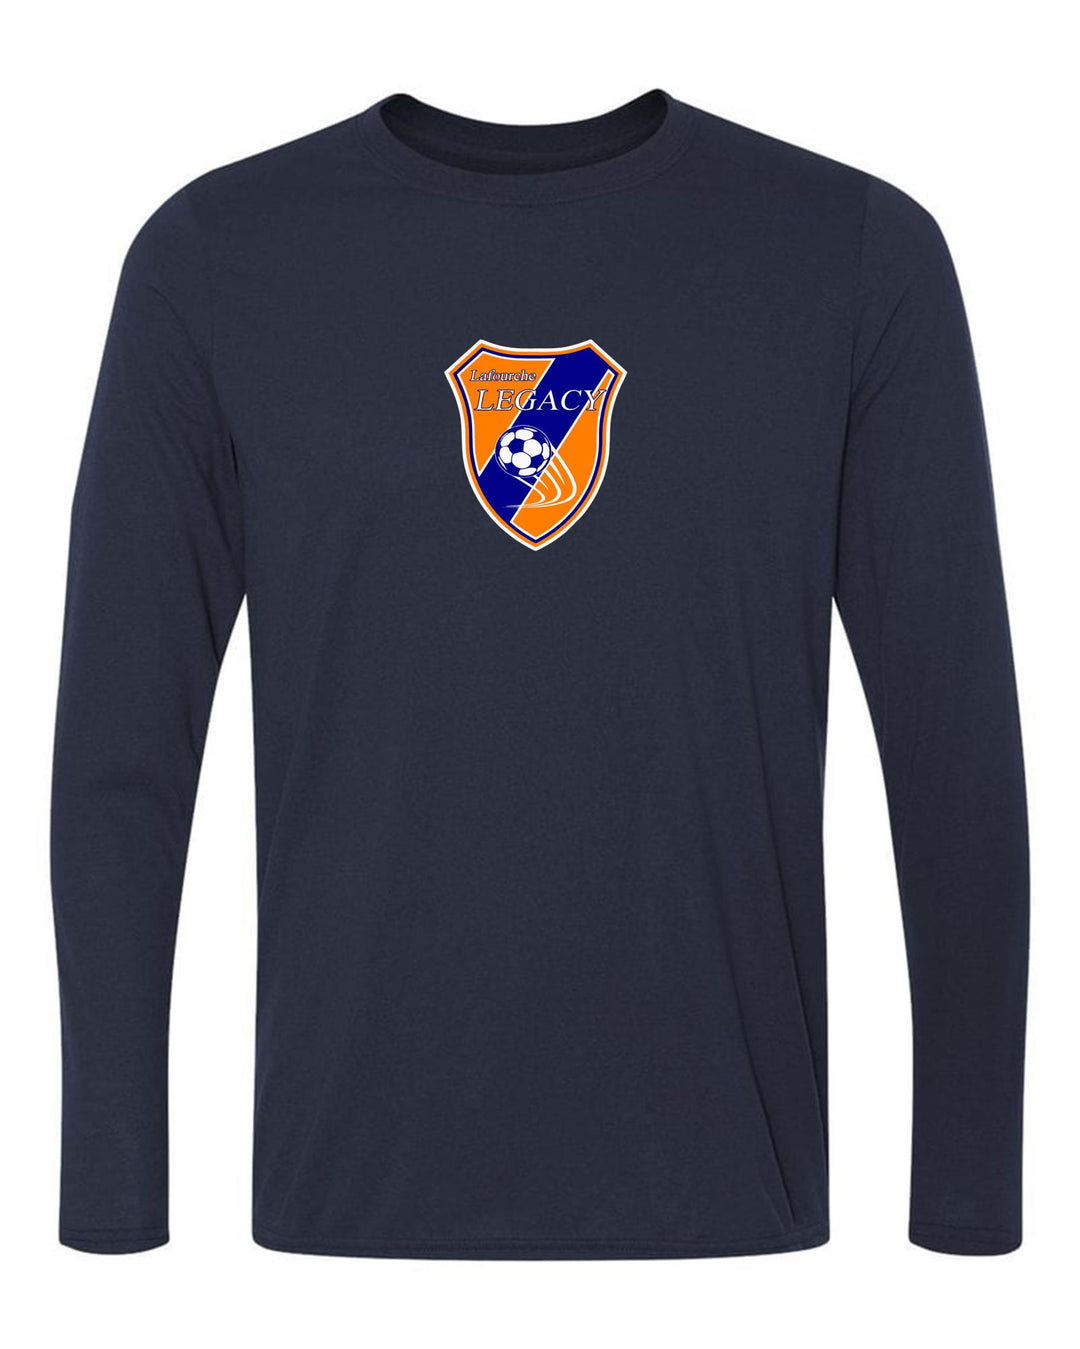 Lefourche Legacy Long-sleeve T-shirt - Navy or Orange  YOUTH LARGE NAVY - Third Coast Soccer